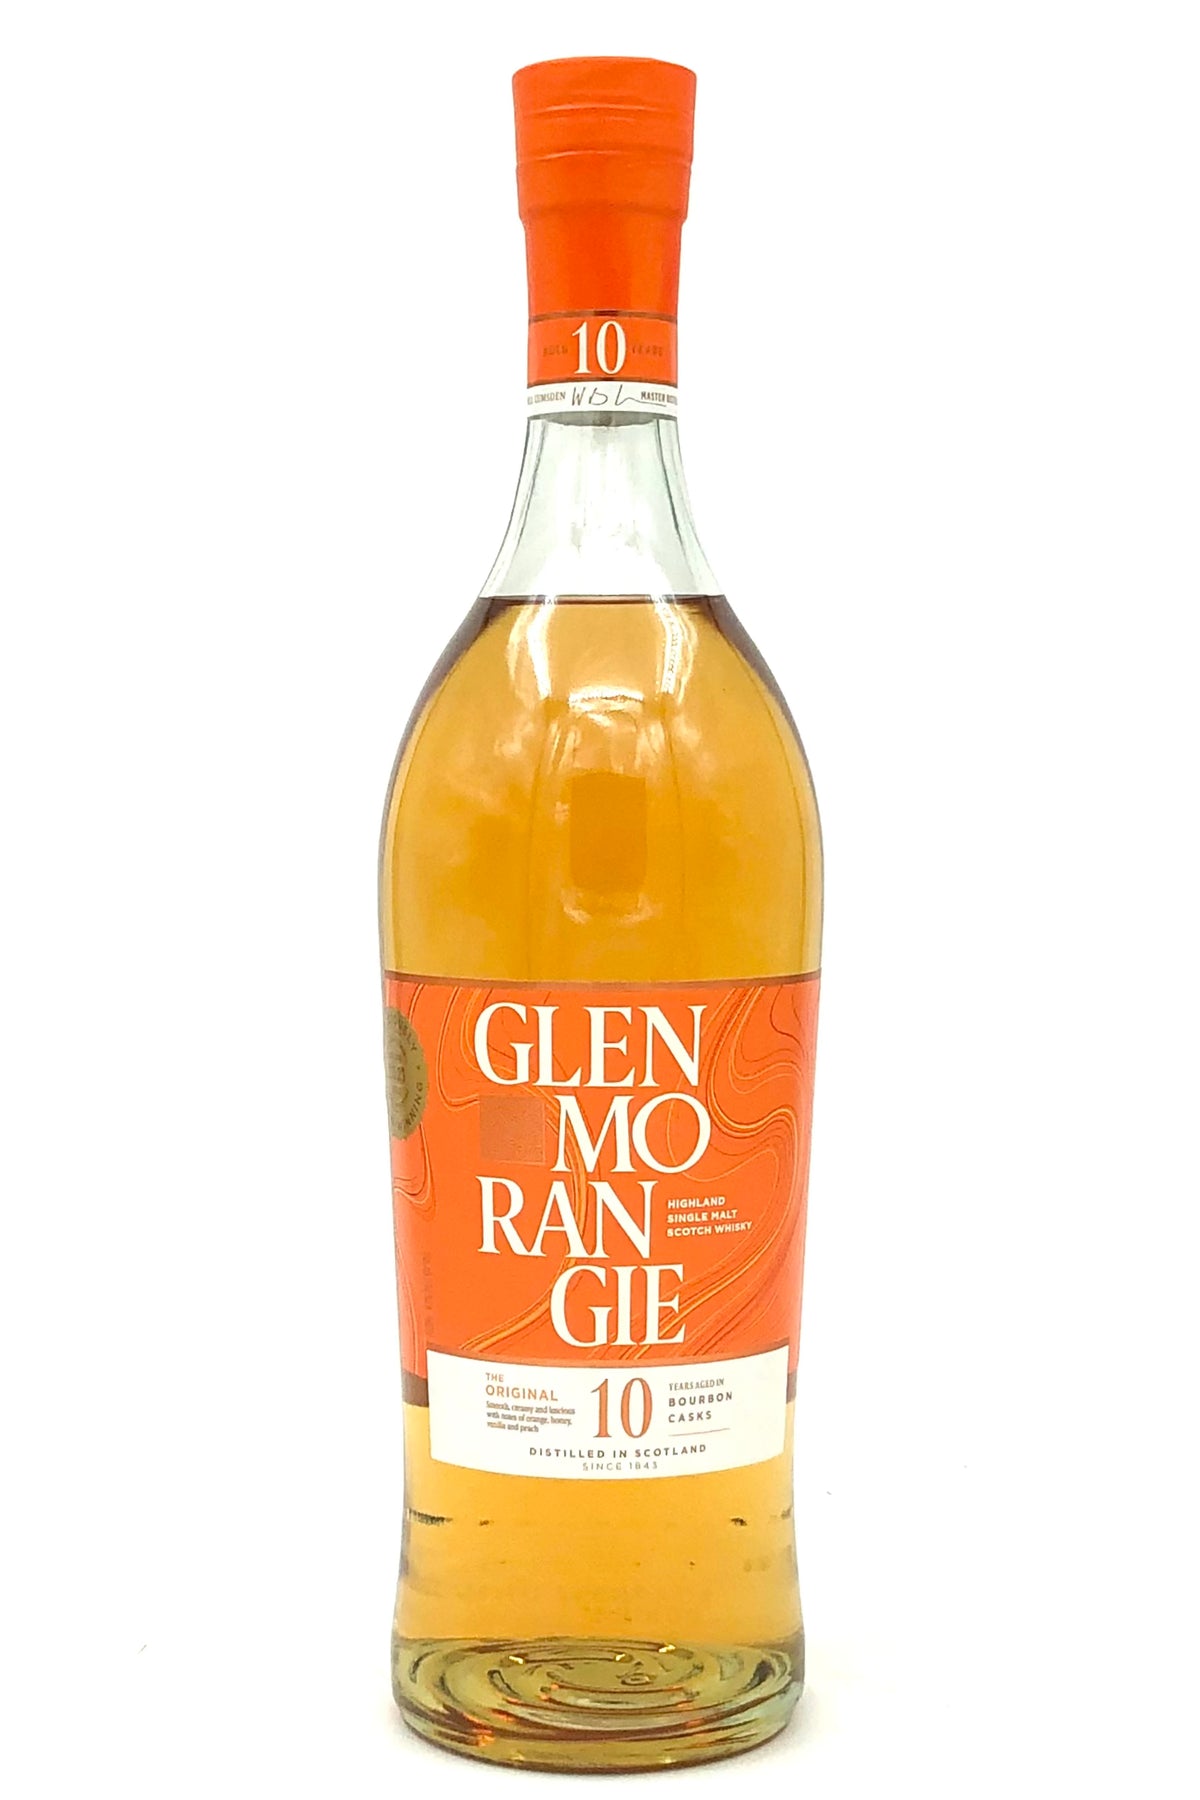 Glenmorangie 10 Year Old Highland Single Malt Scotch Whisky The Original